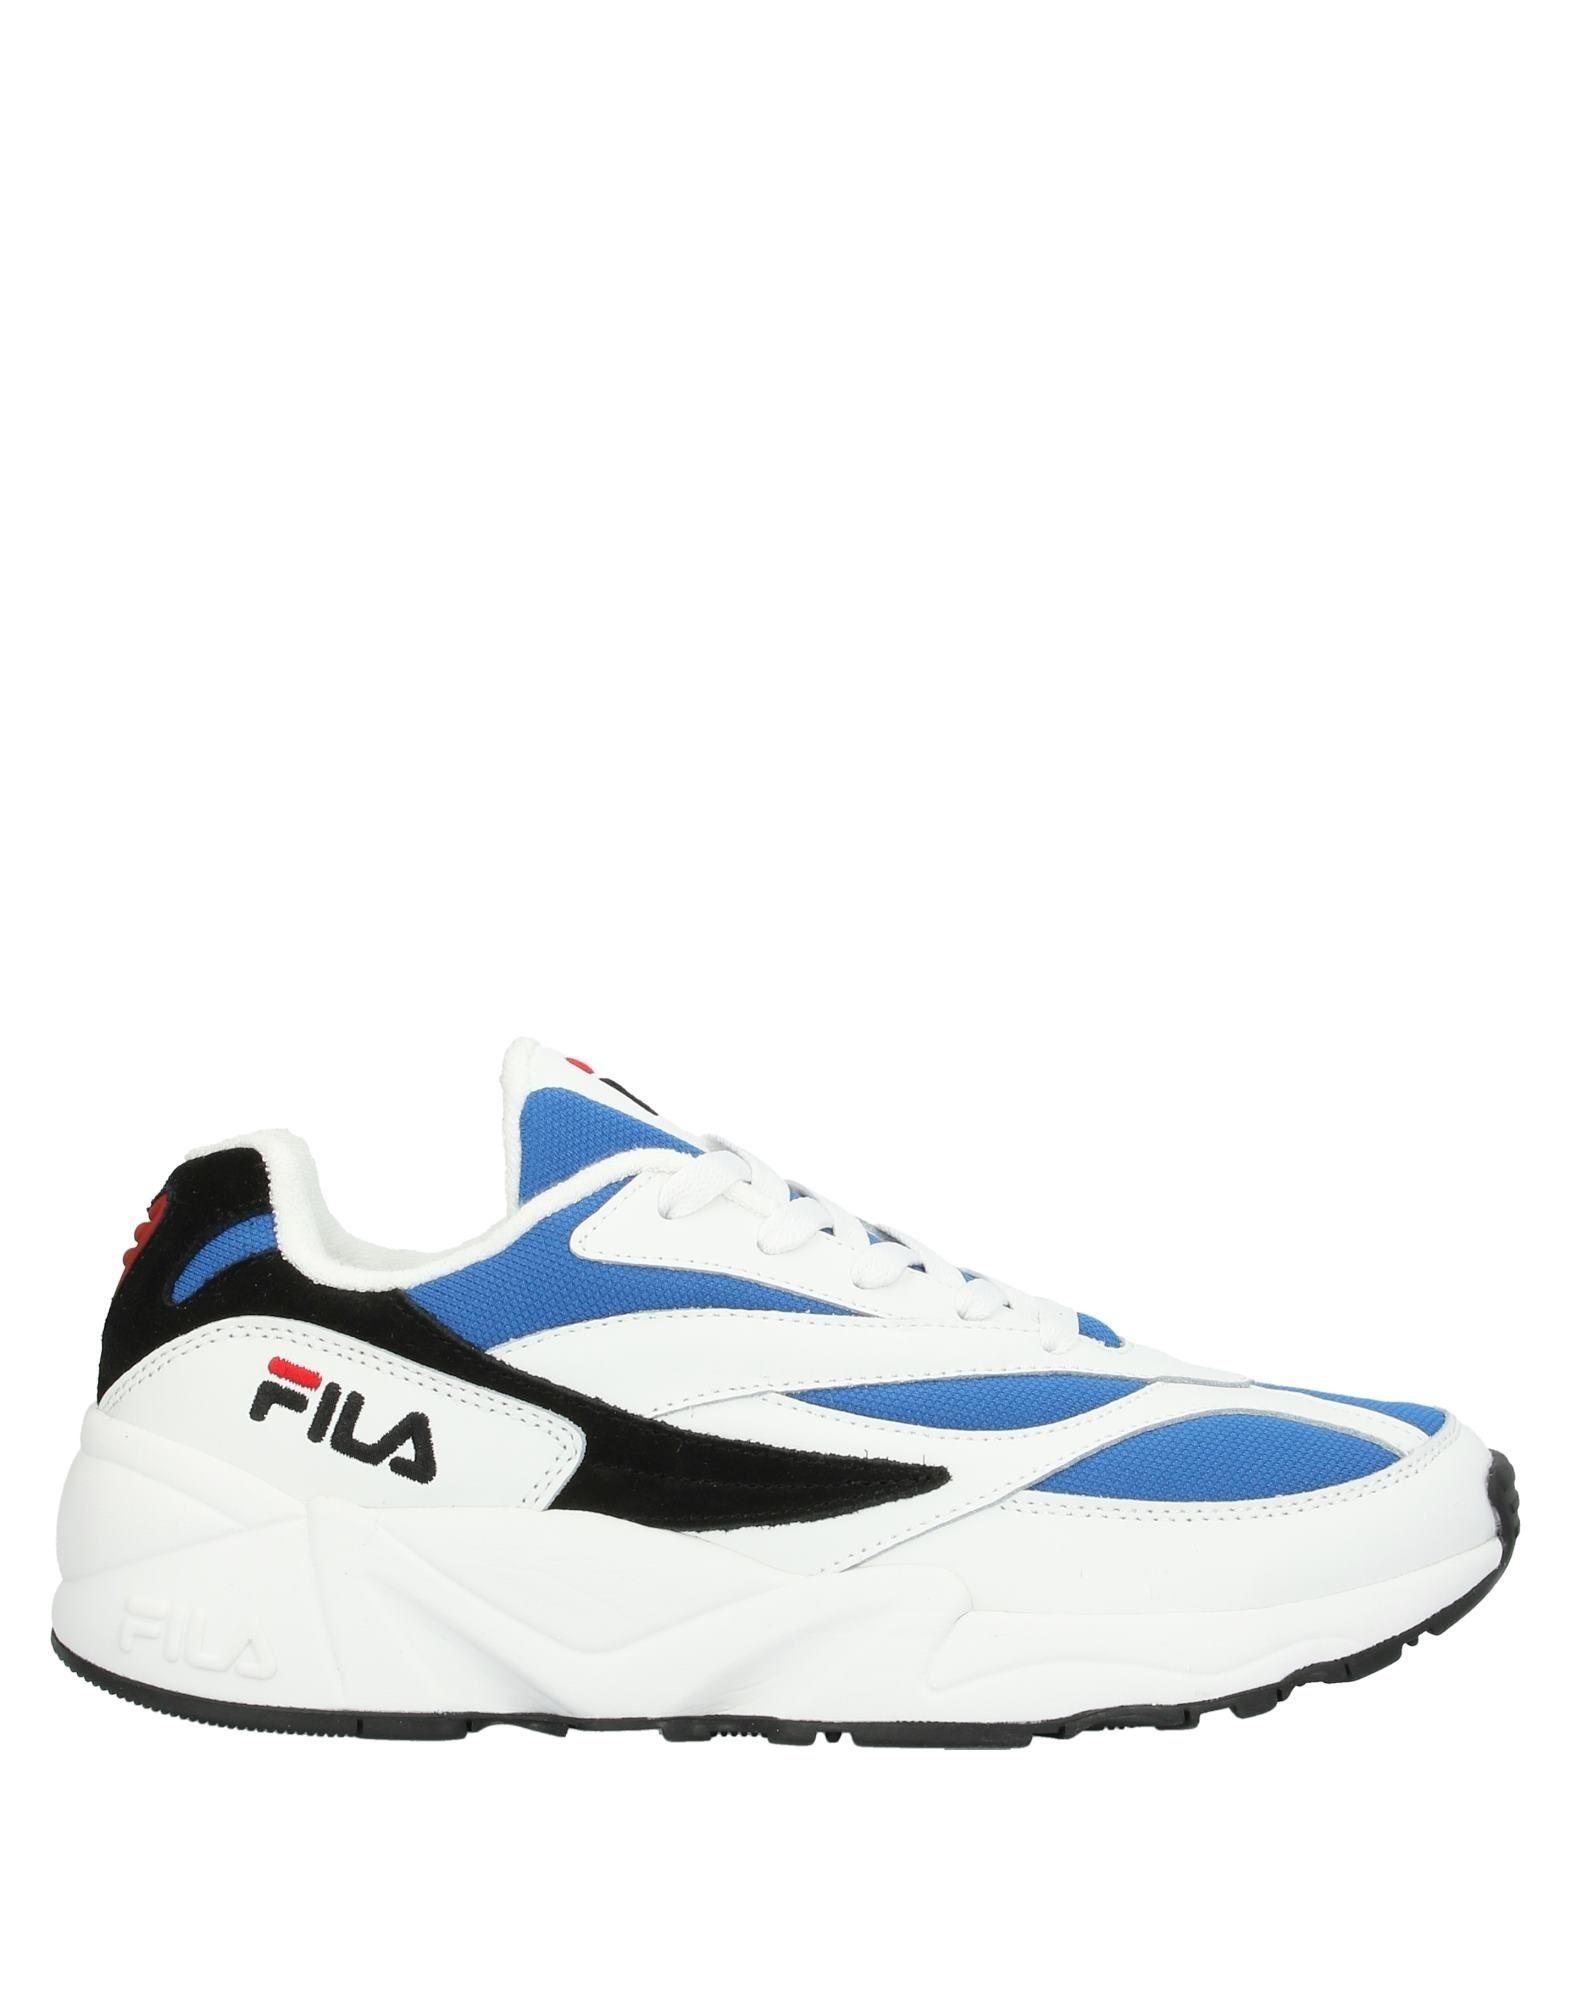 Fila Leather Low-tops & Sneakers in Blue for Men - Lyst